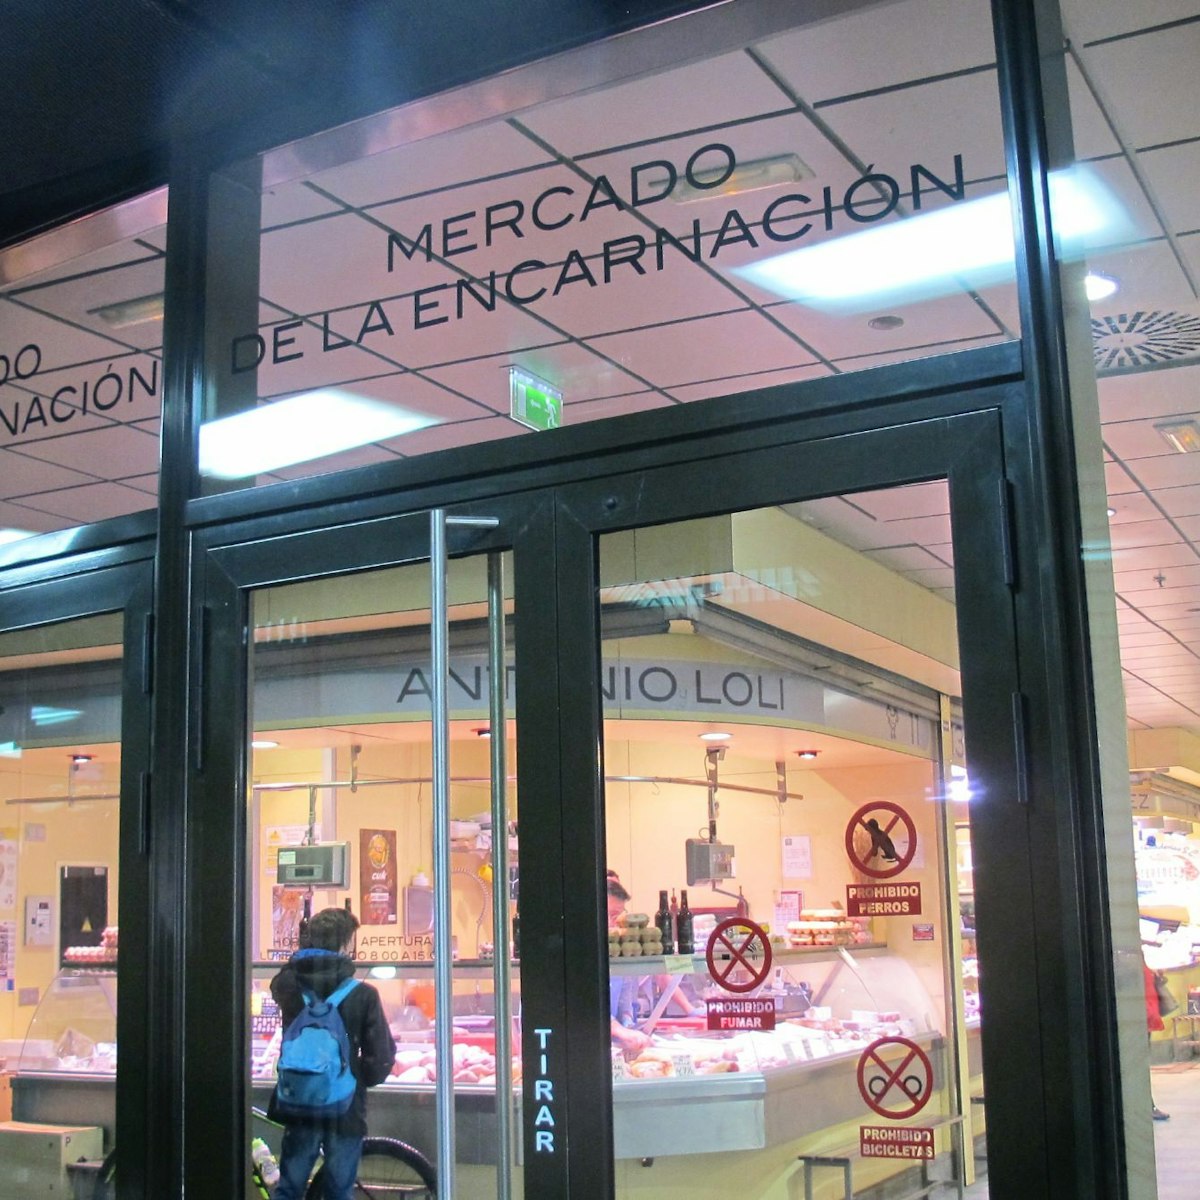 Entrance to market with name, Mercado de la Encarnacion.